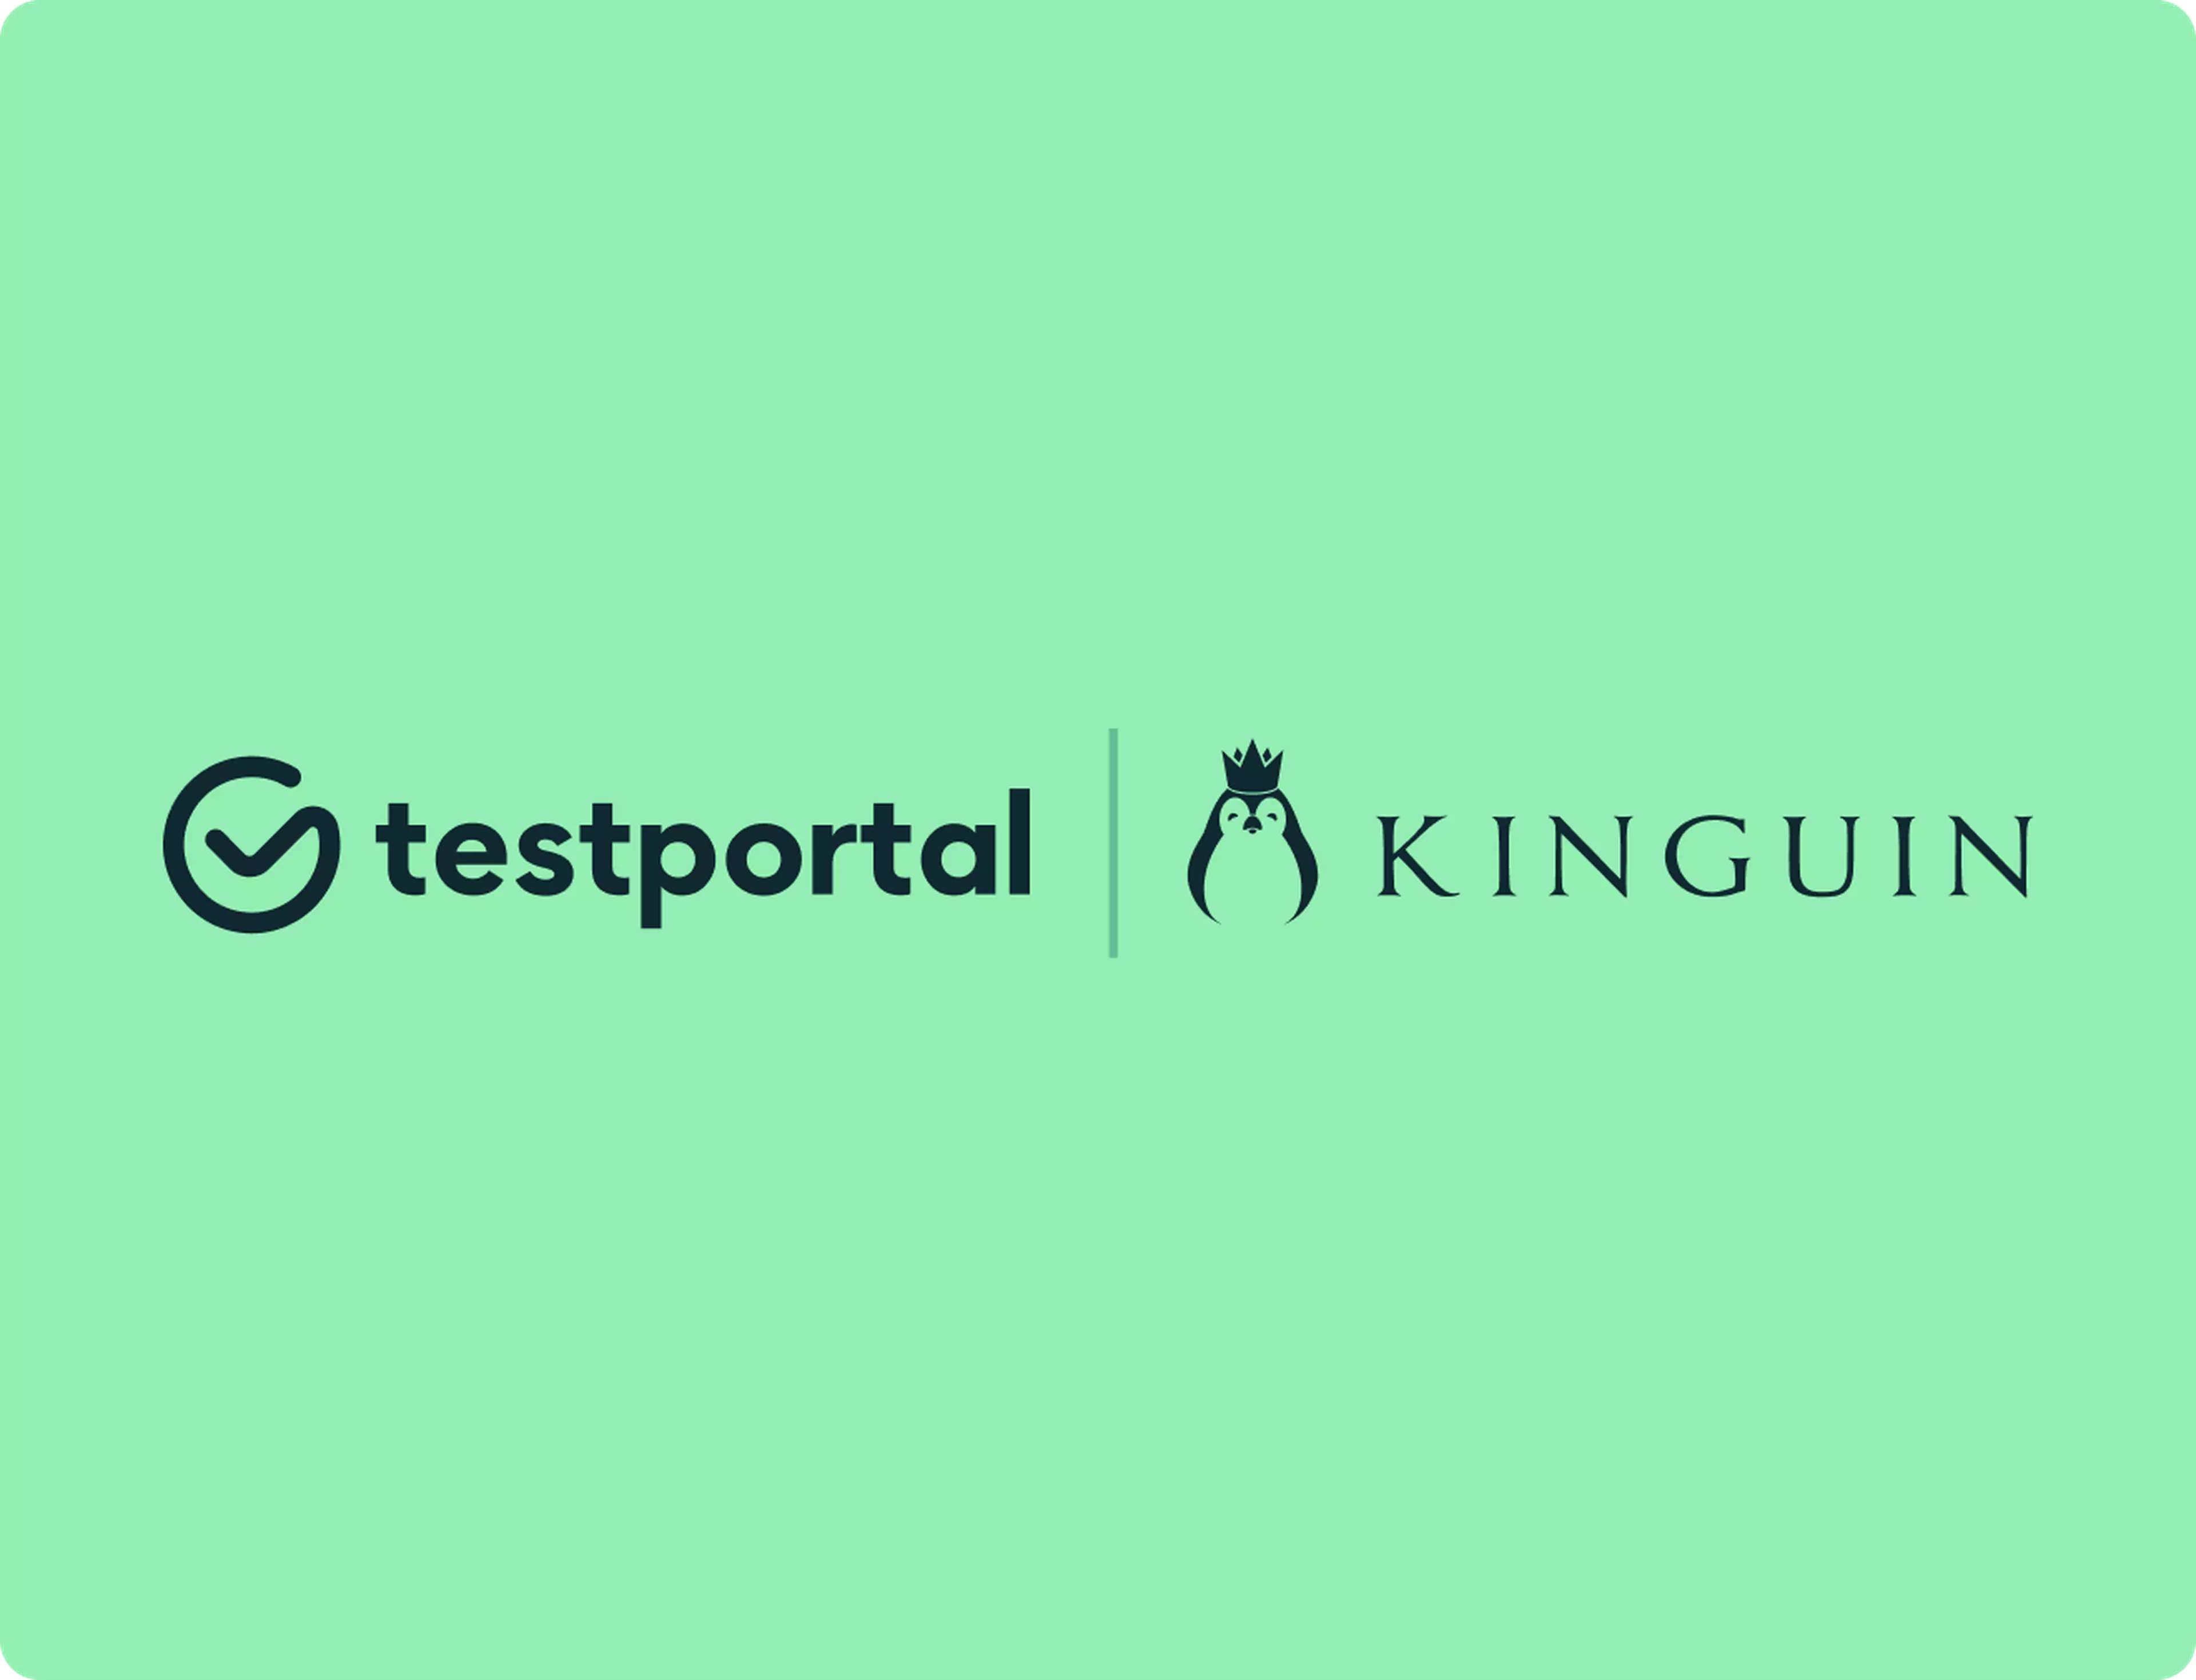 Testportal and Kinguin logos.